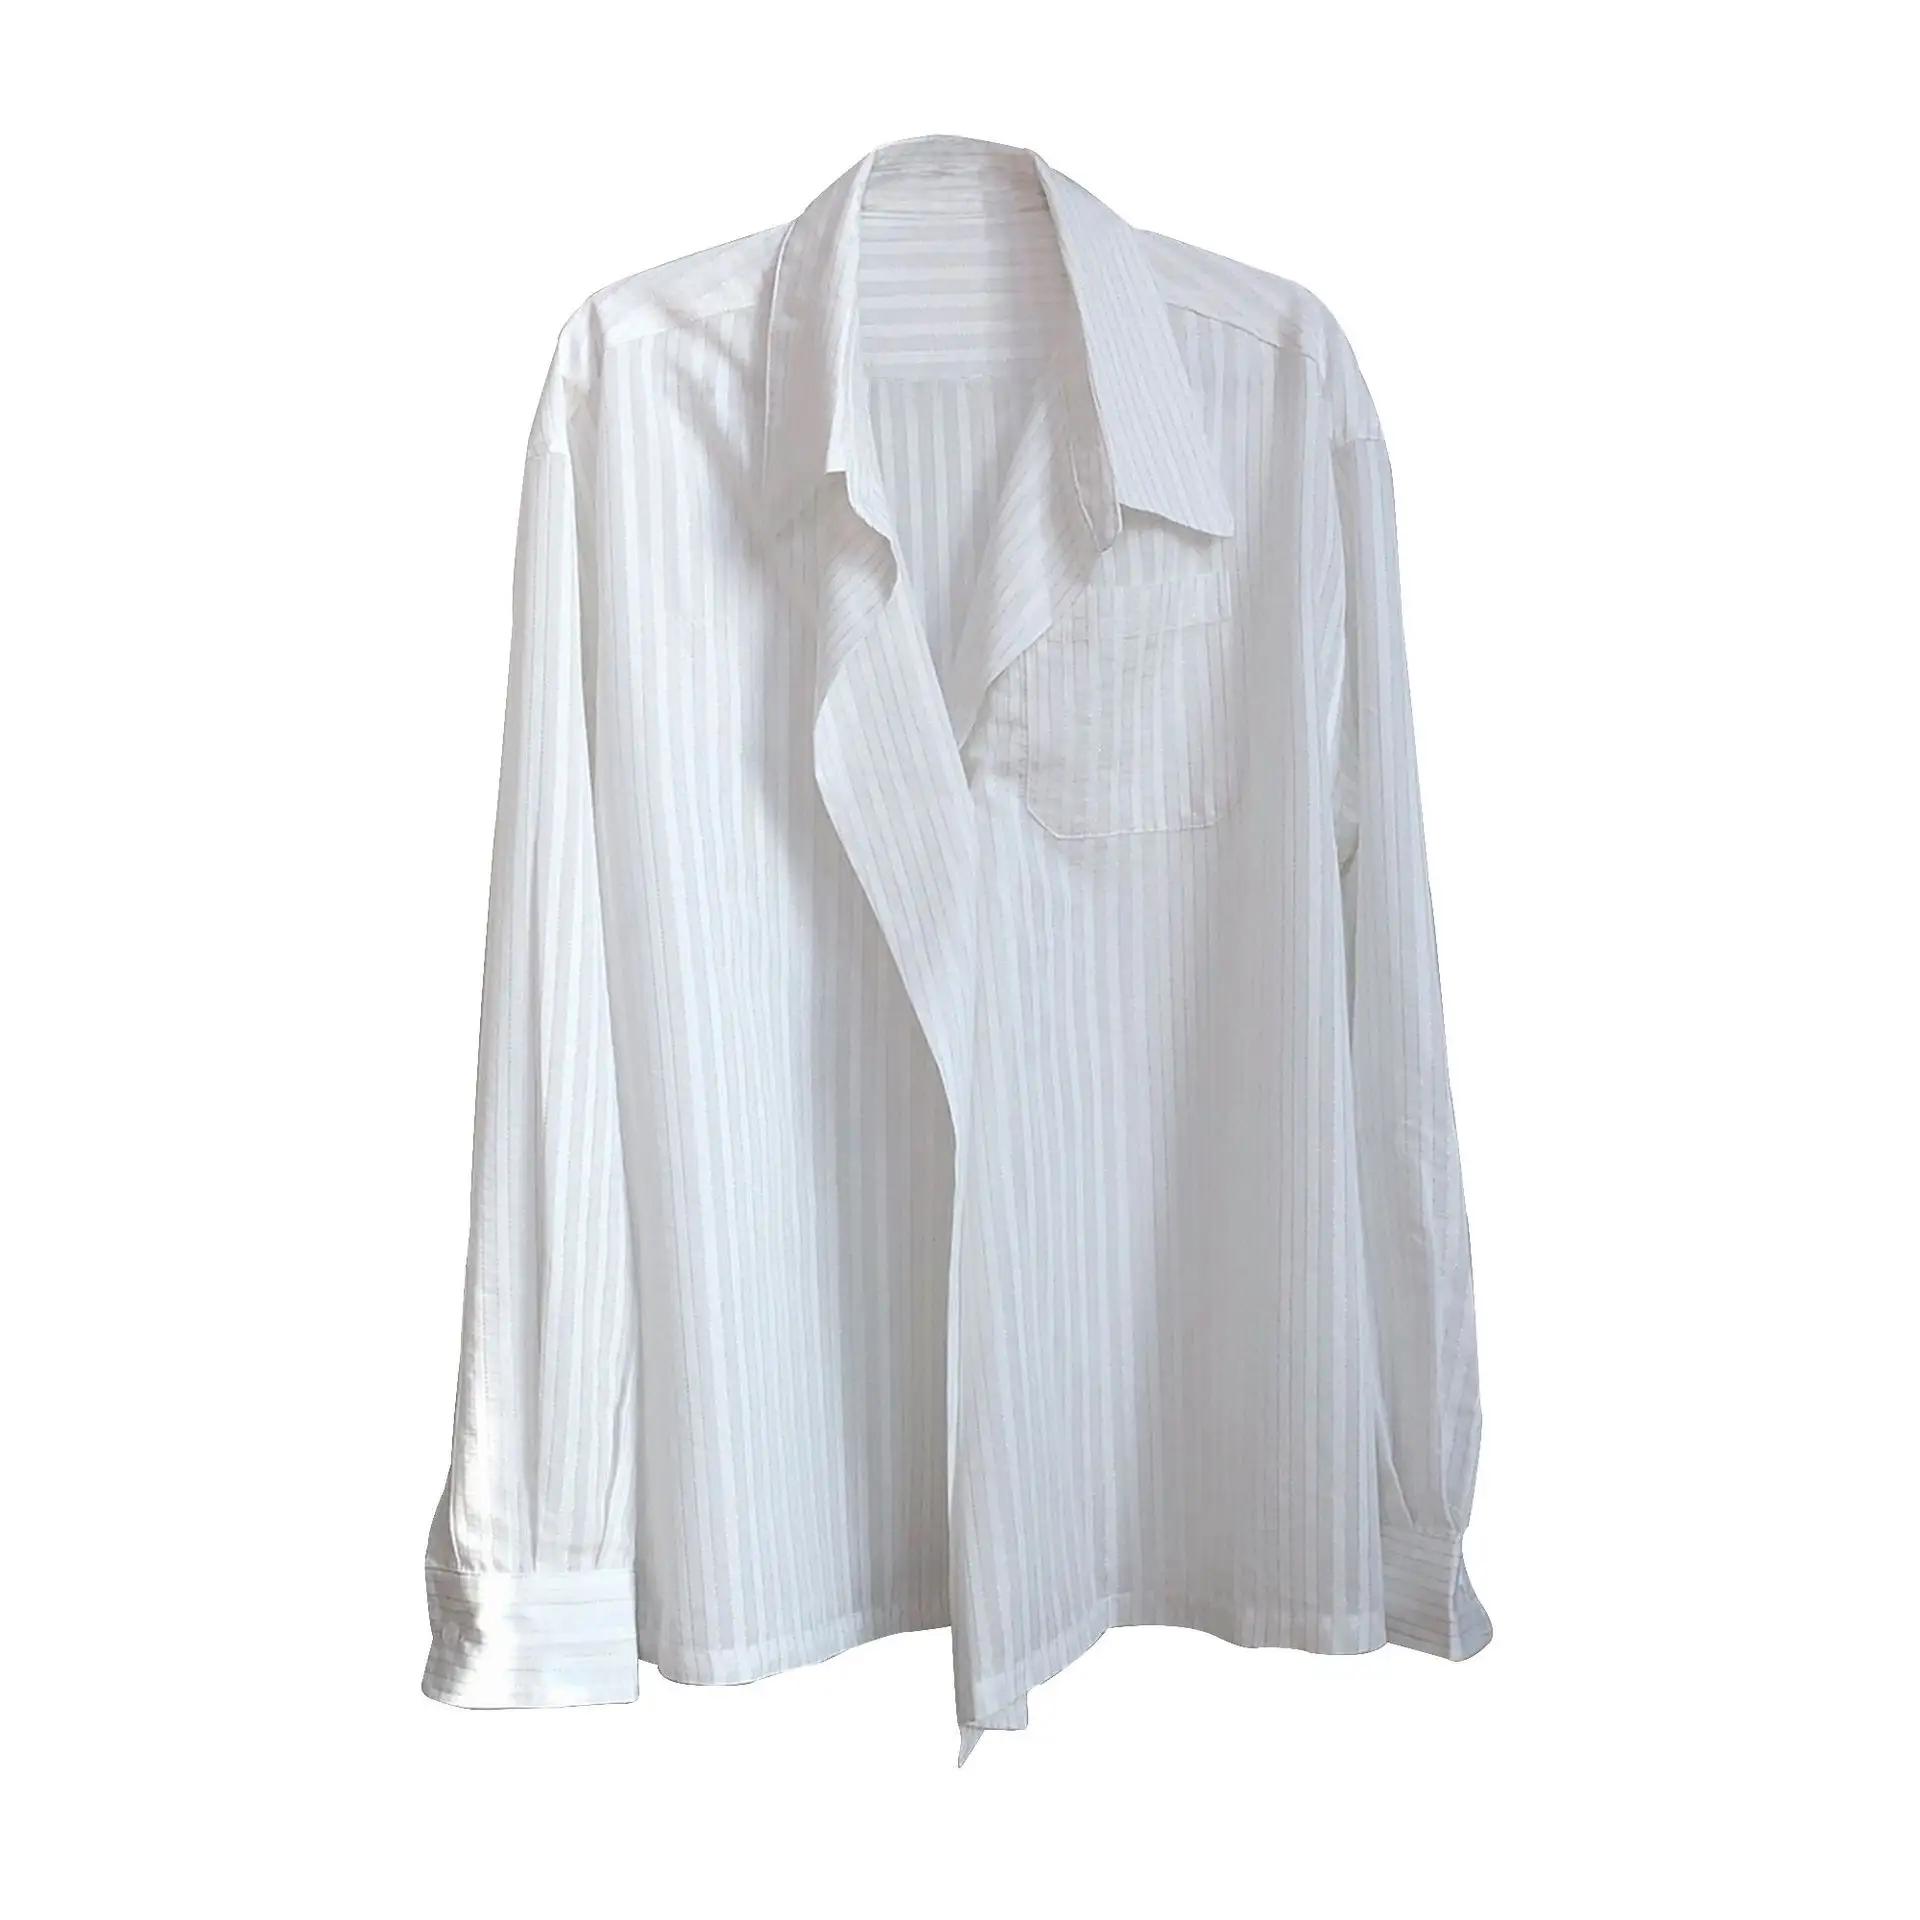 Camisa a rayas para mujer, blusa holgada con textura transparente, blusa transpirable